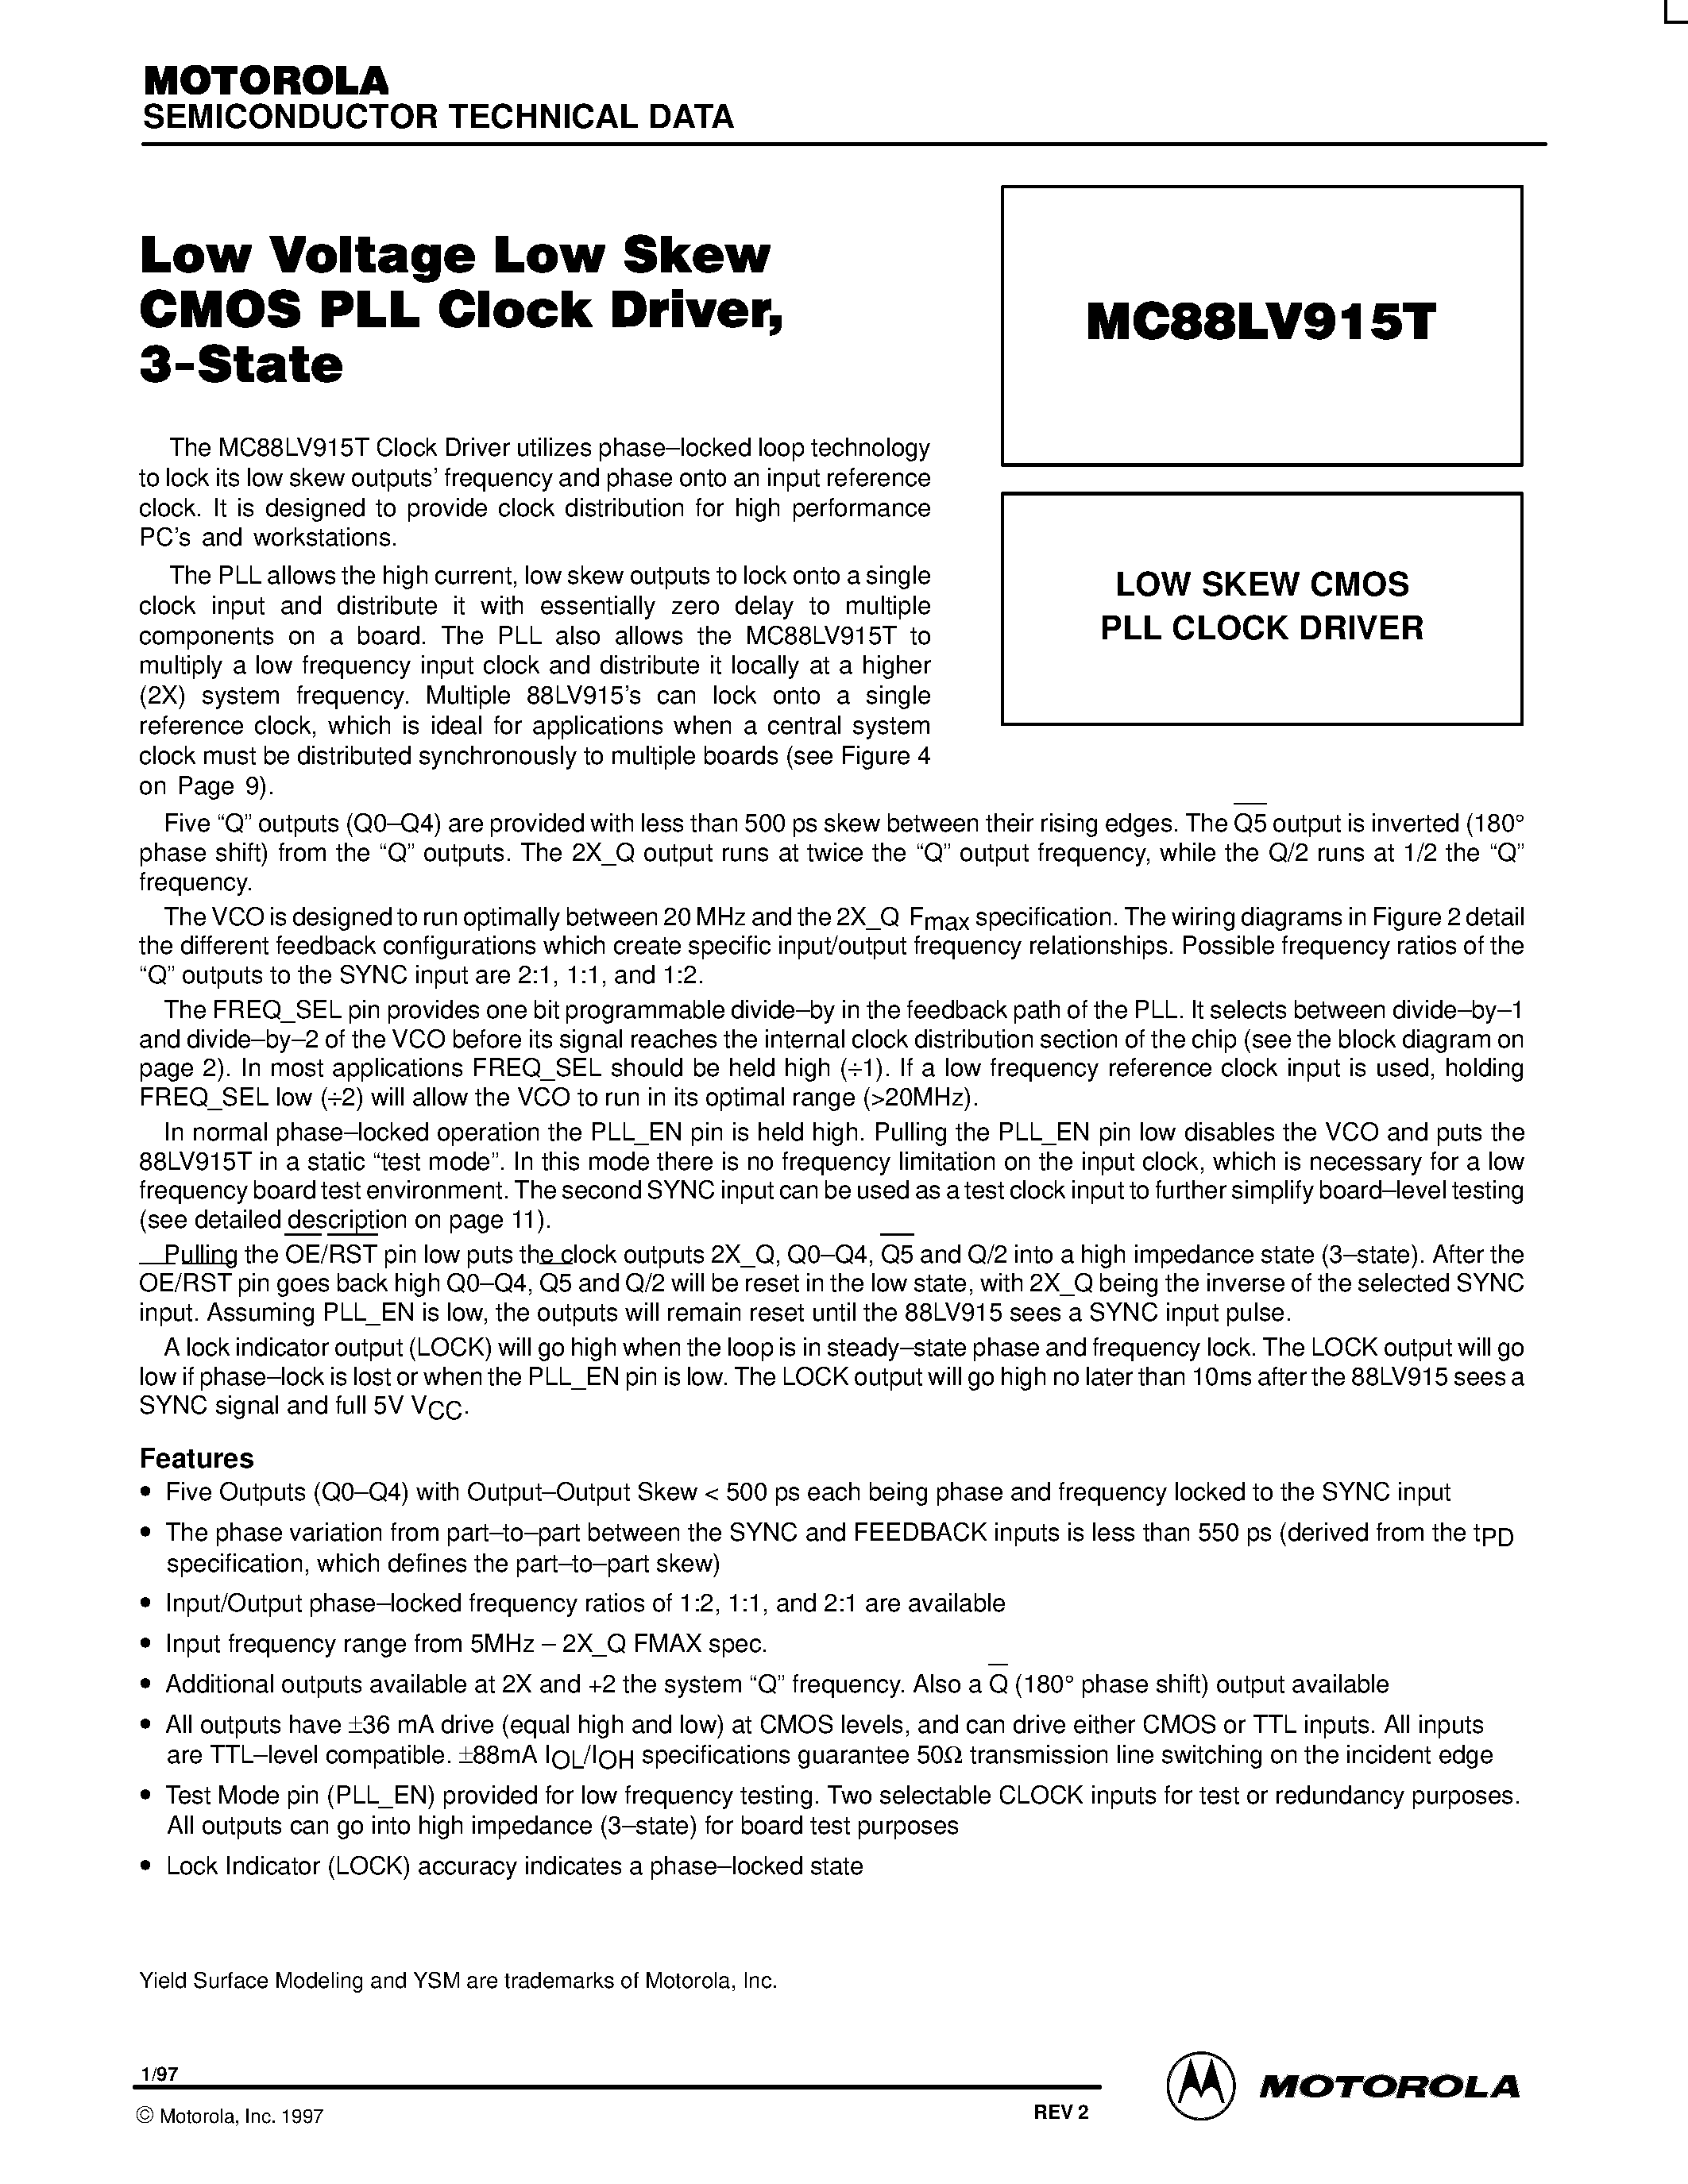 Даташит MC88LV915T - LOW SKEW CMOS PLL CLOCK DRIVER страница 1